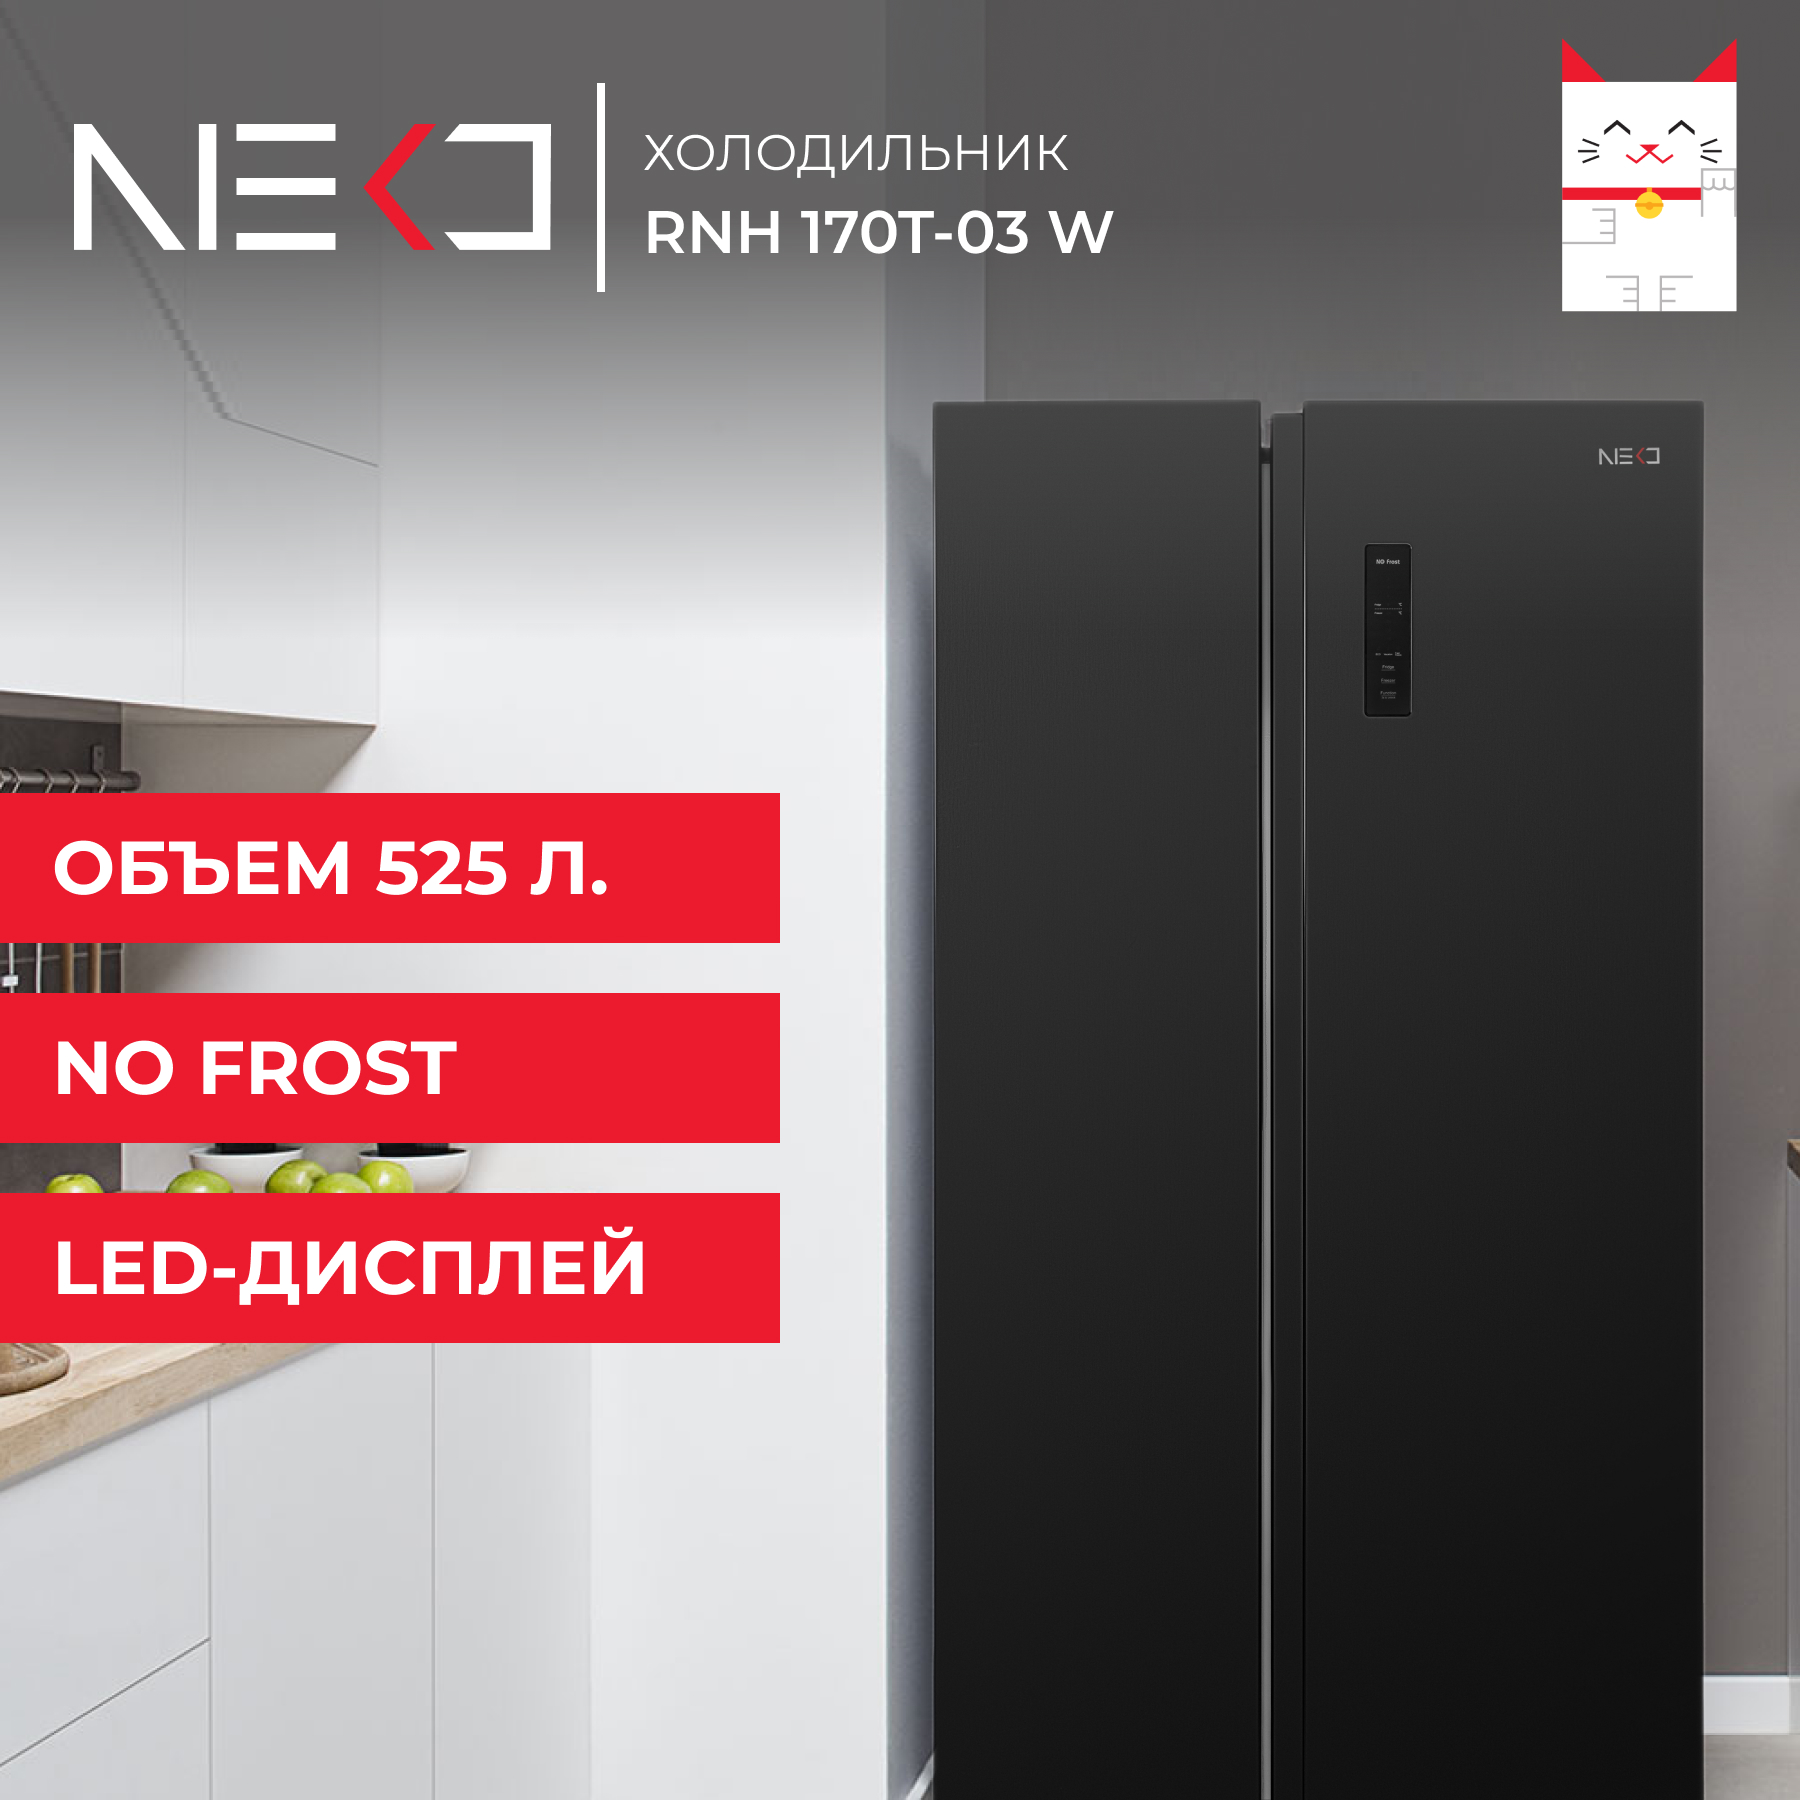 Холодильник Neko RNH 170T-03 W черный холодильник side by side scandilux sbs 711 y02 w fs 711 y02 w r 711 y02 w sbs kit